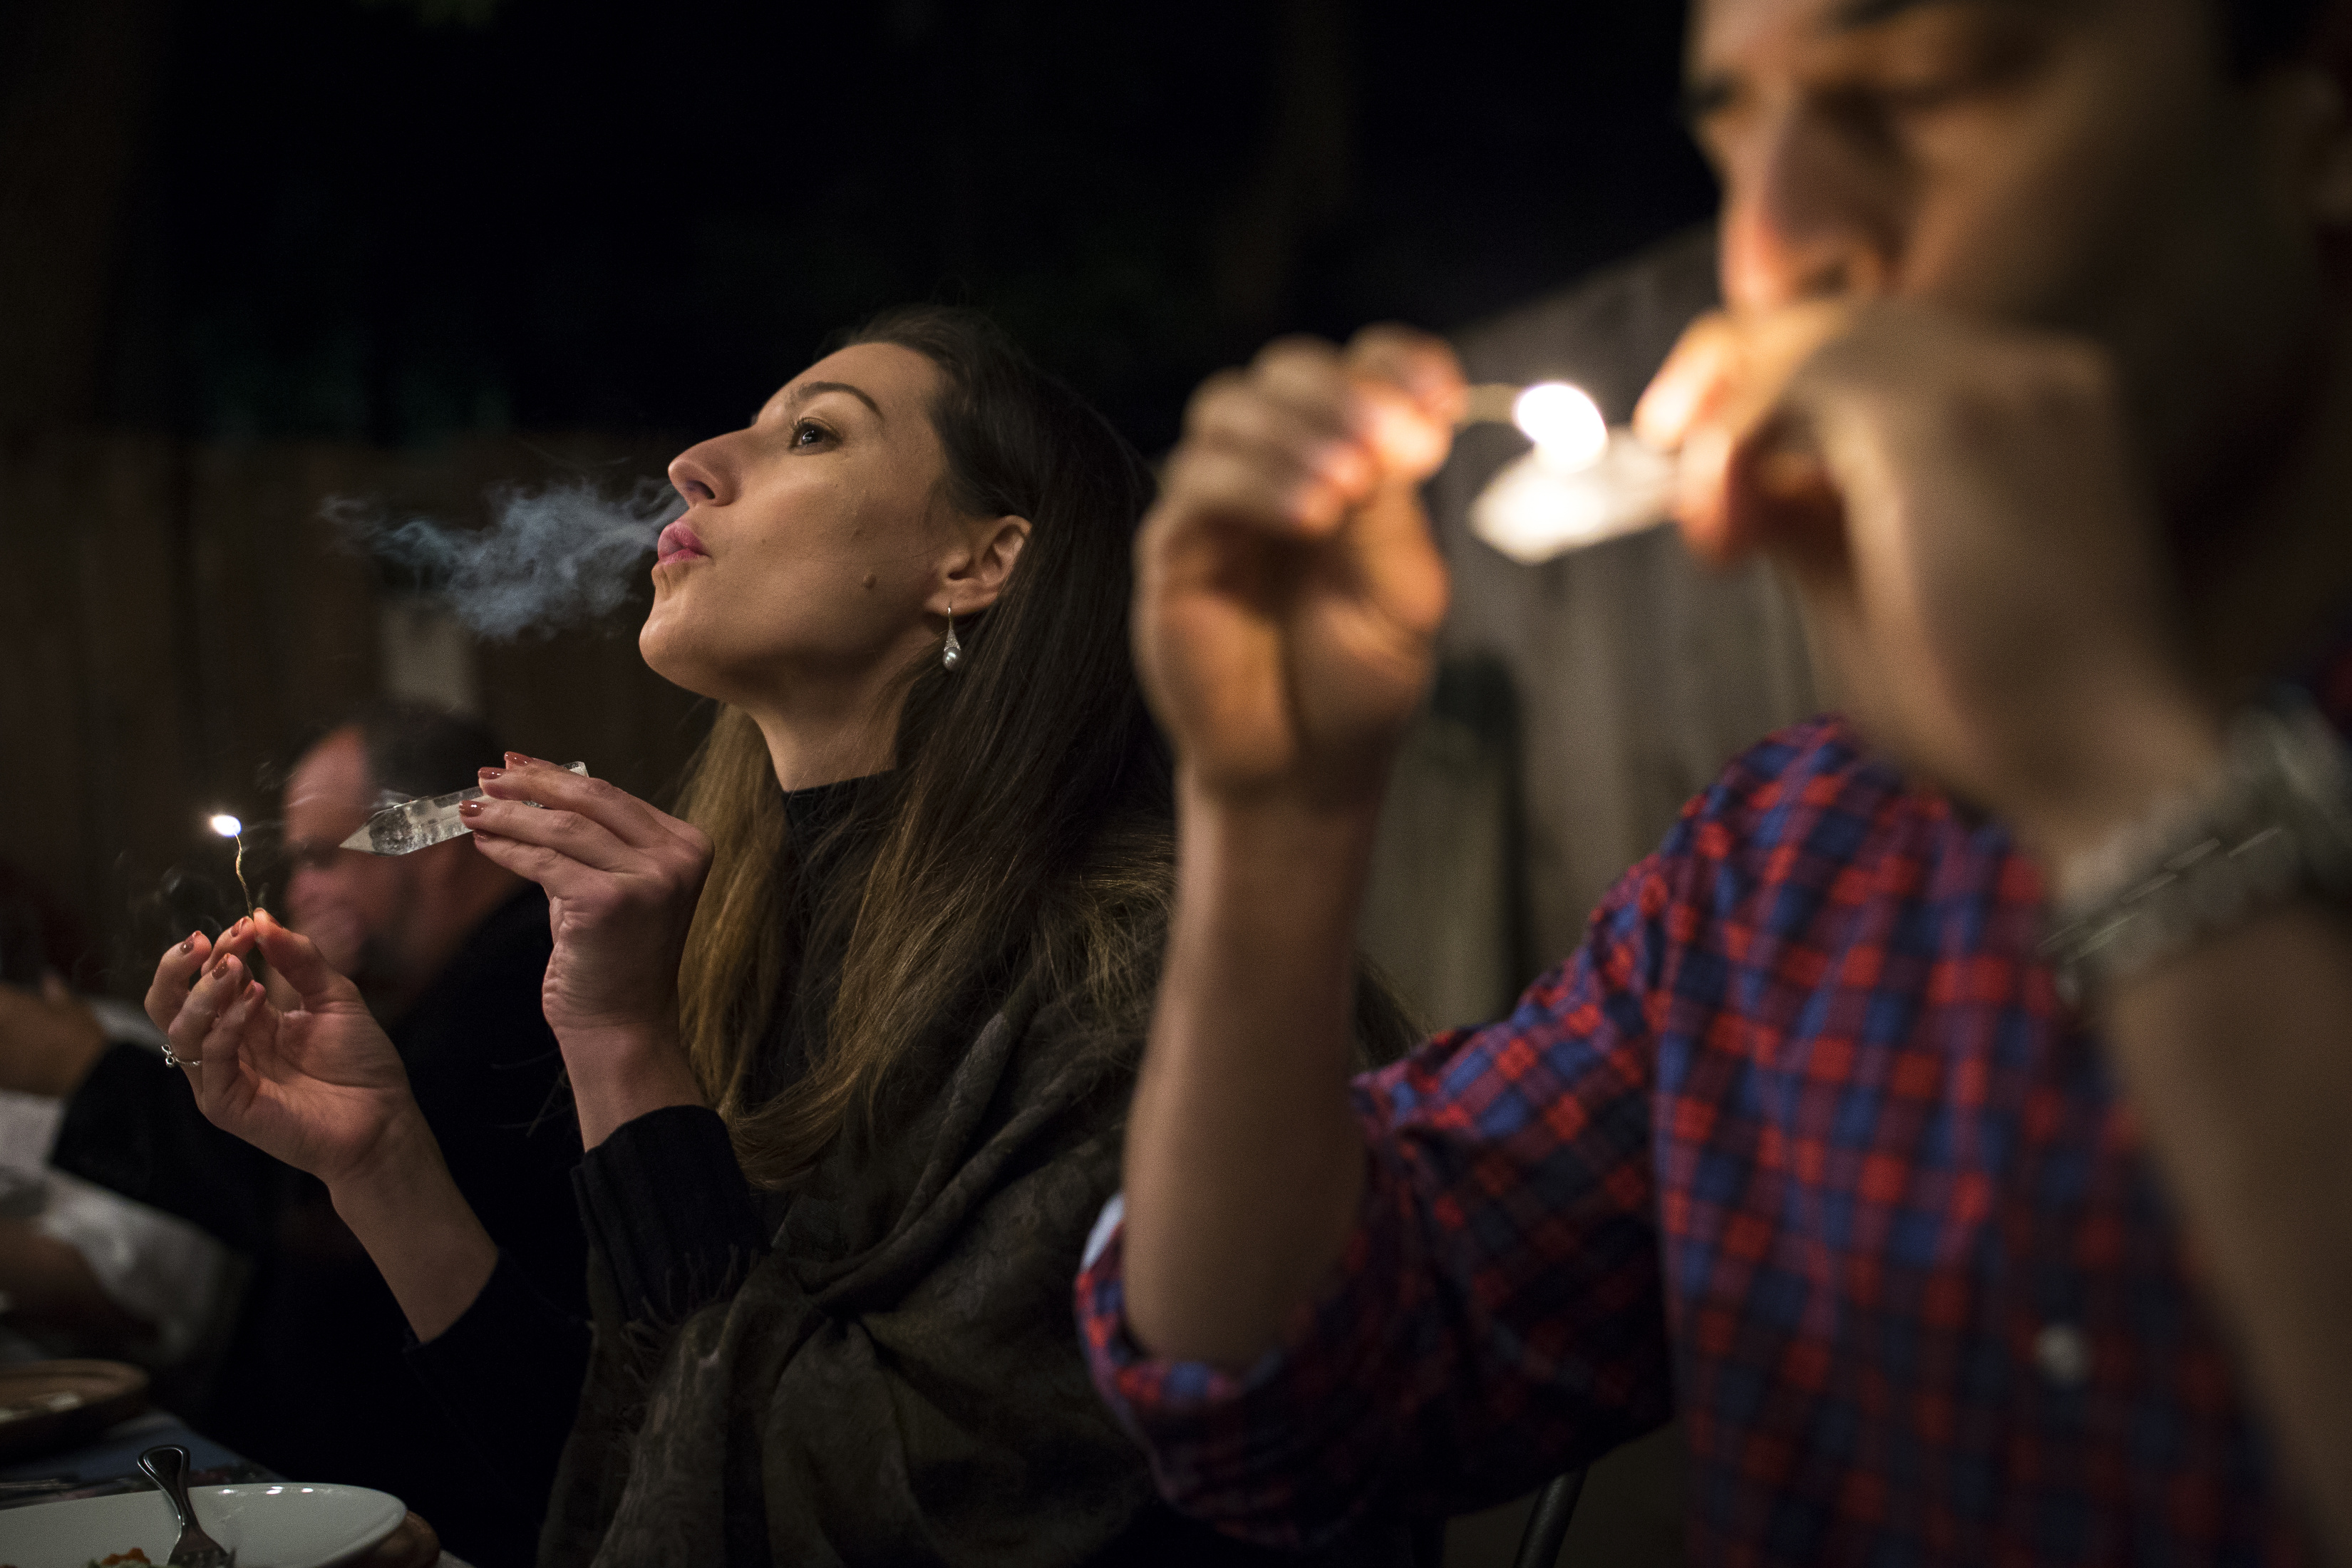 People smoked marijuana during an event in Cambridge in 2019.